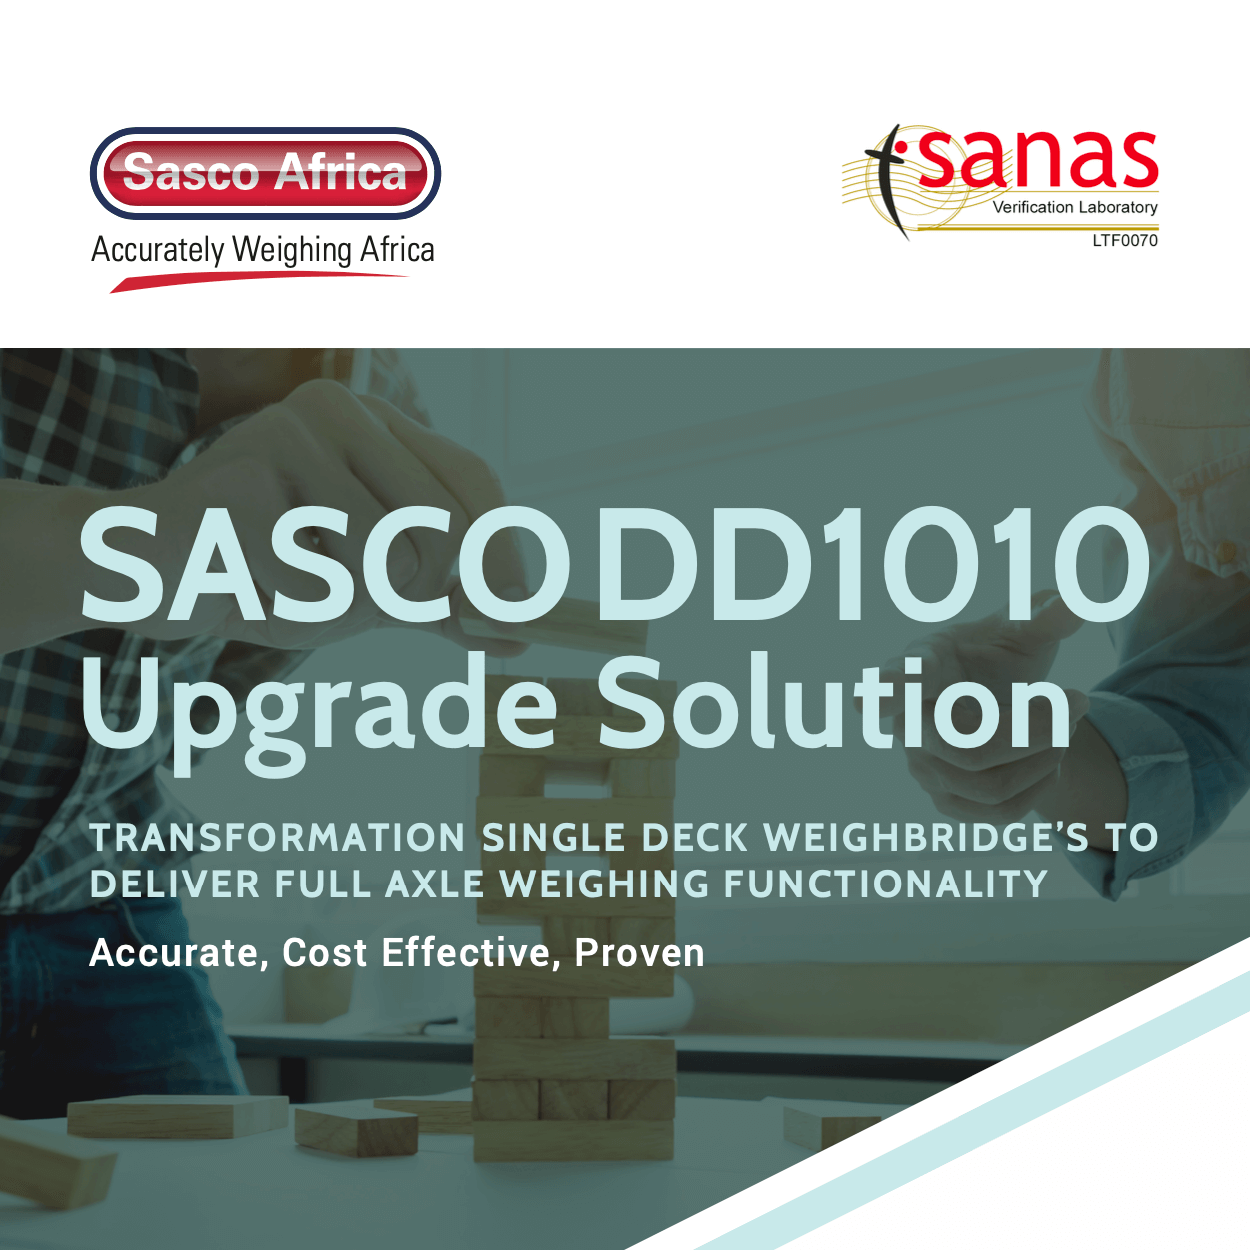 Sasco Upgrade (DD1010) 2022